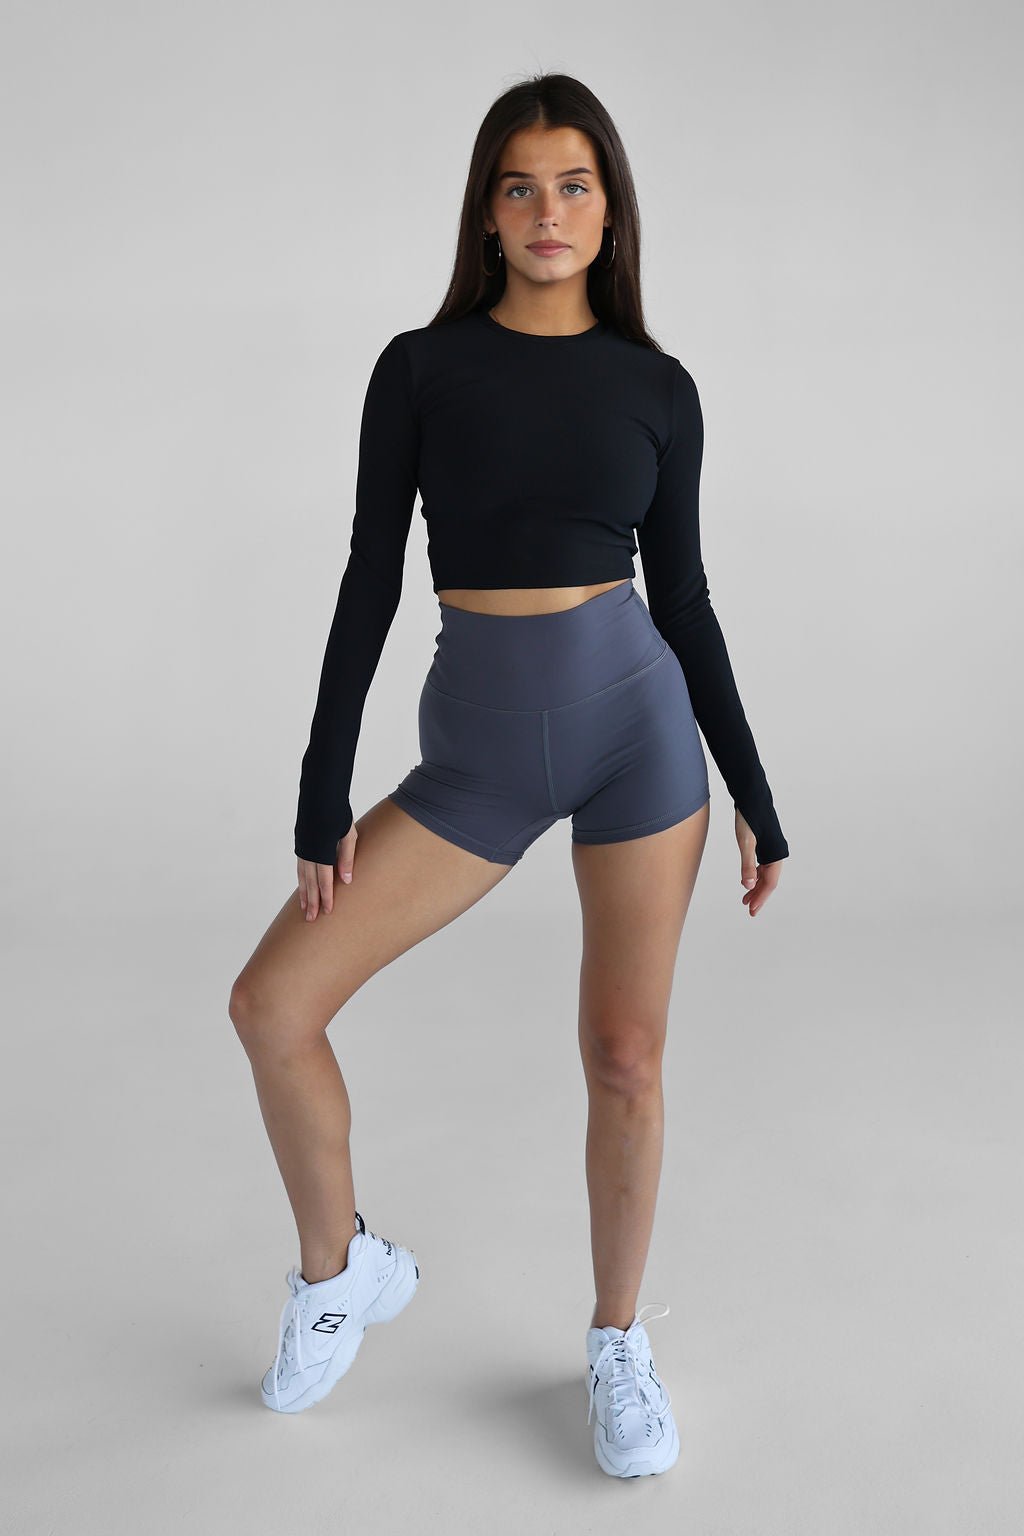 Booty Shorts - Charcoal - LEELO ACTIVE